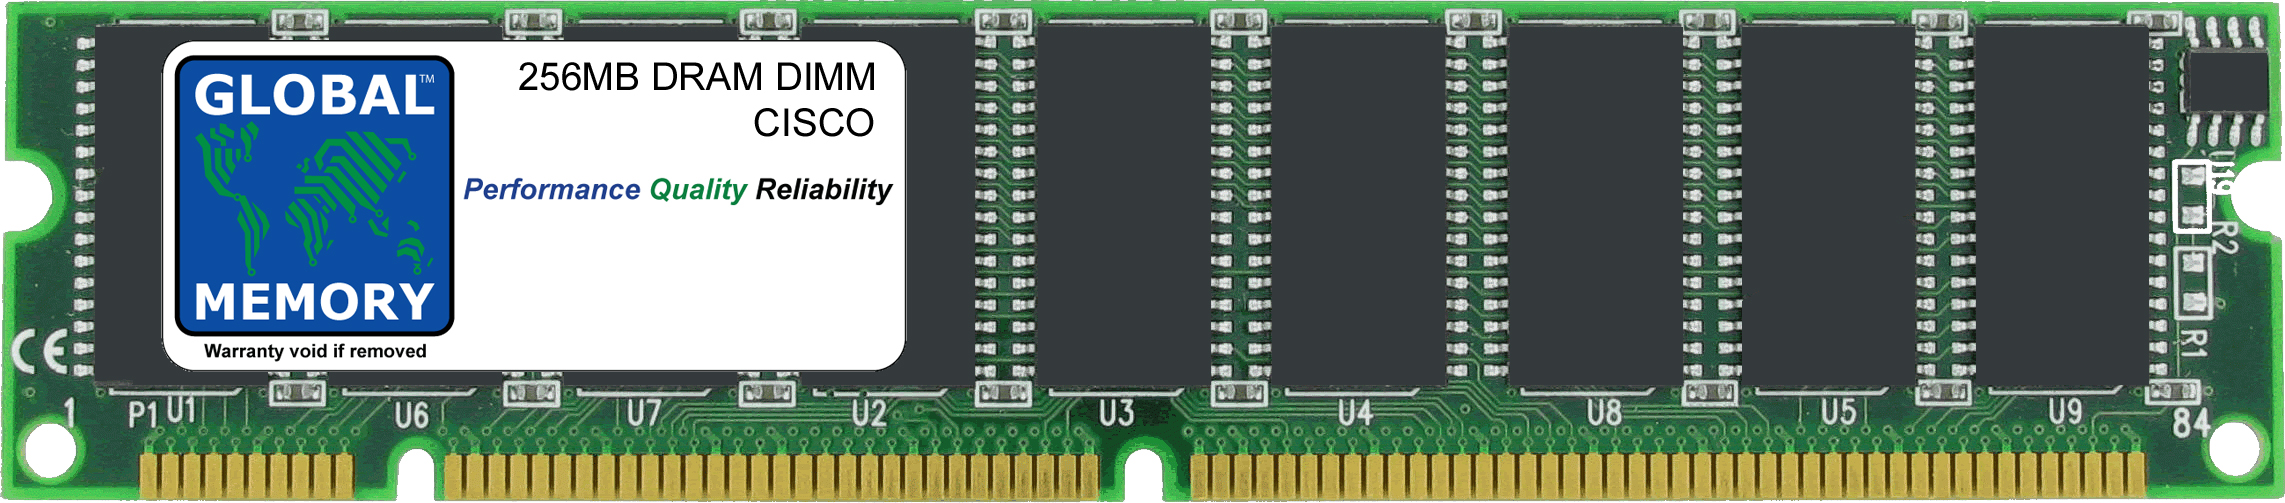 256MB DRAM DIMM MEMORY RAM FOR CISCO 7200 SERIES ROUTERS NPE-225 / 300 & NSE-1 / 1-7206 VXR (MEM-SD-NSE-256MB)